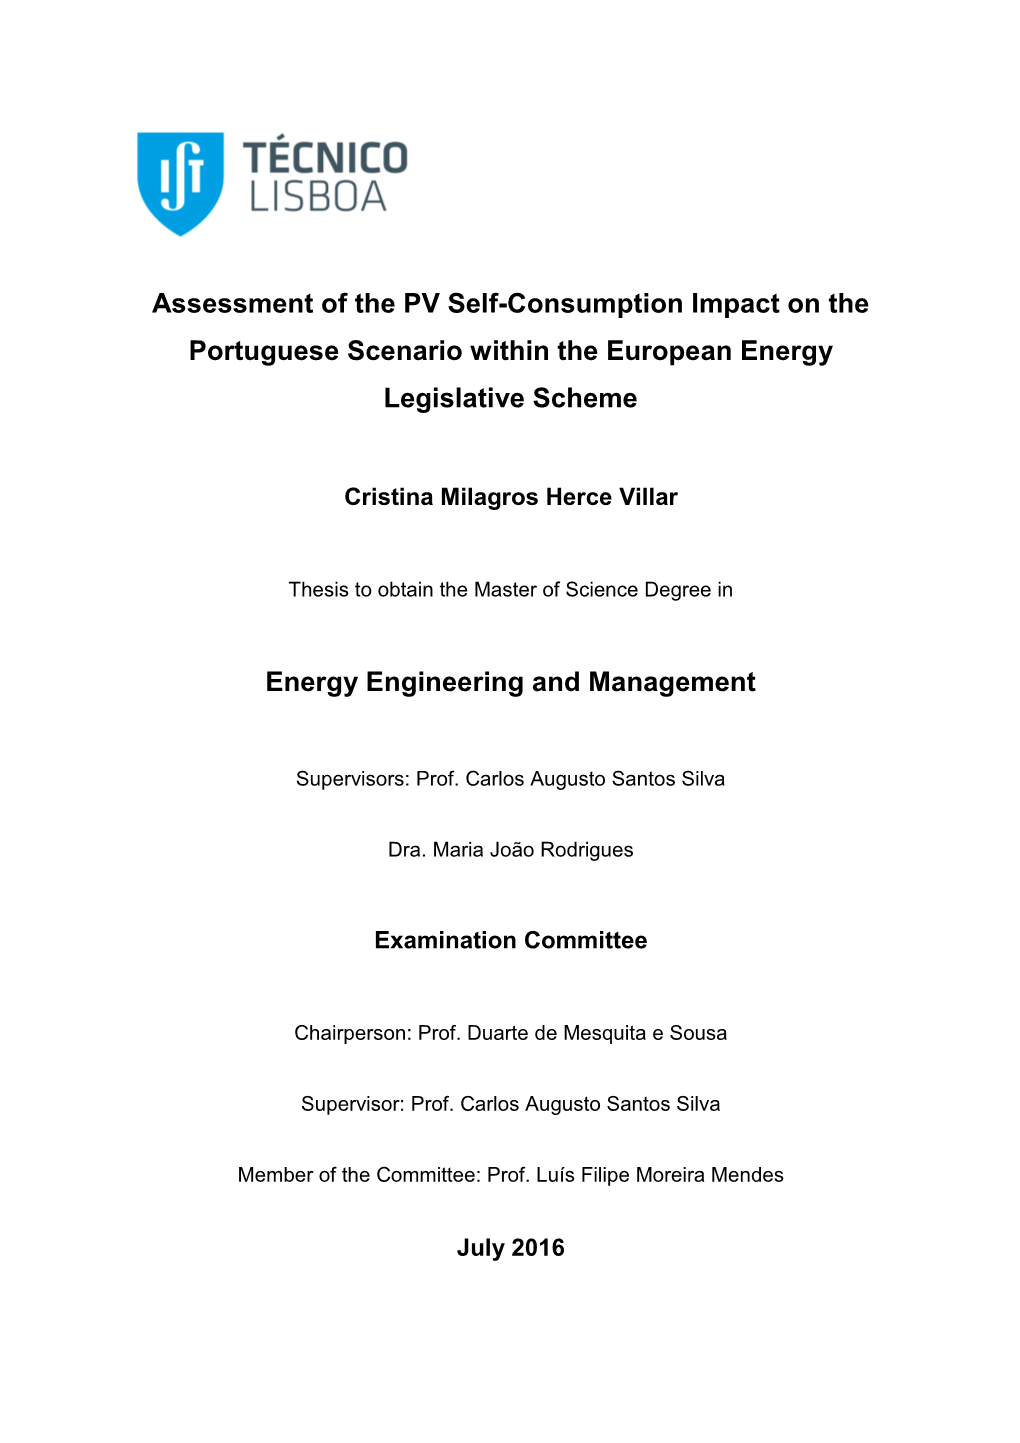 Assessment of the PV Self-Consumption Impact on the Portuguese Scenario Within the European Energy Legislative Scheme